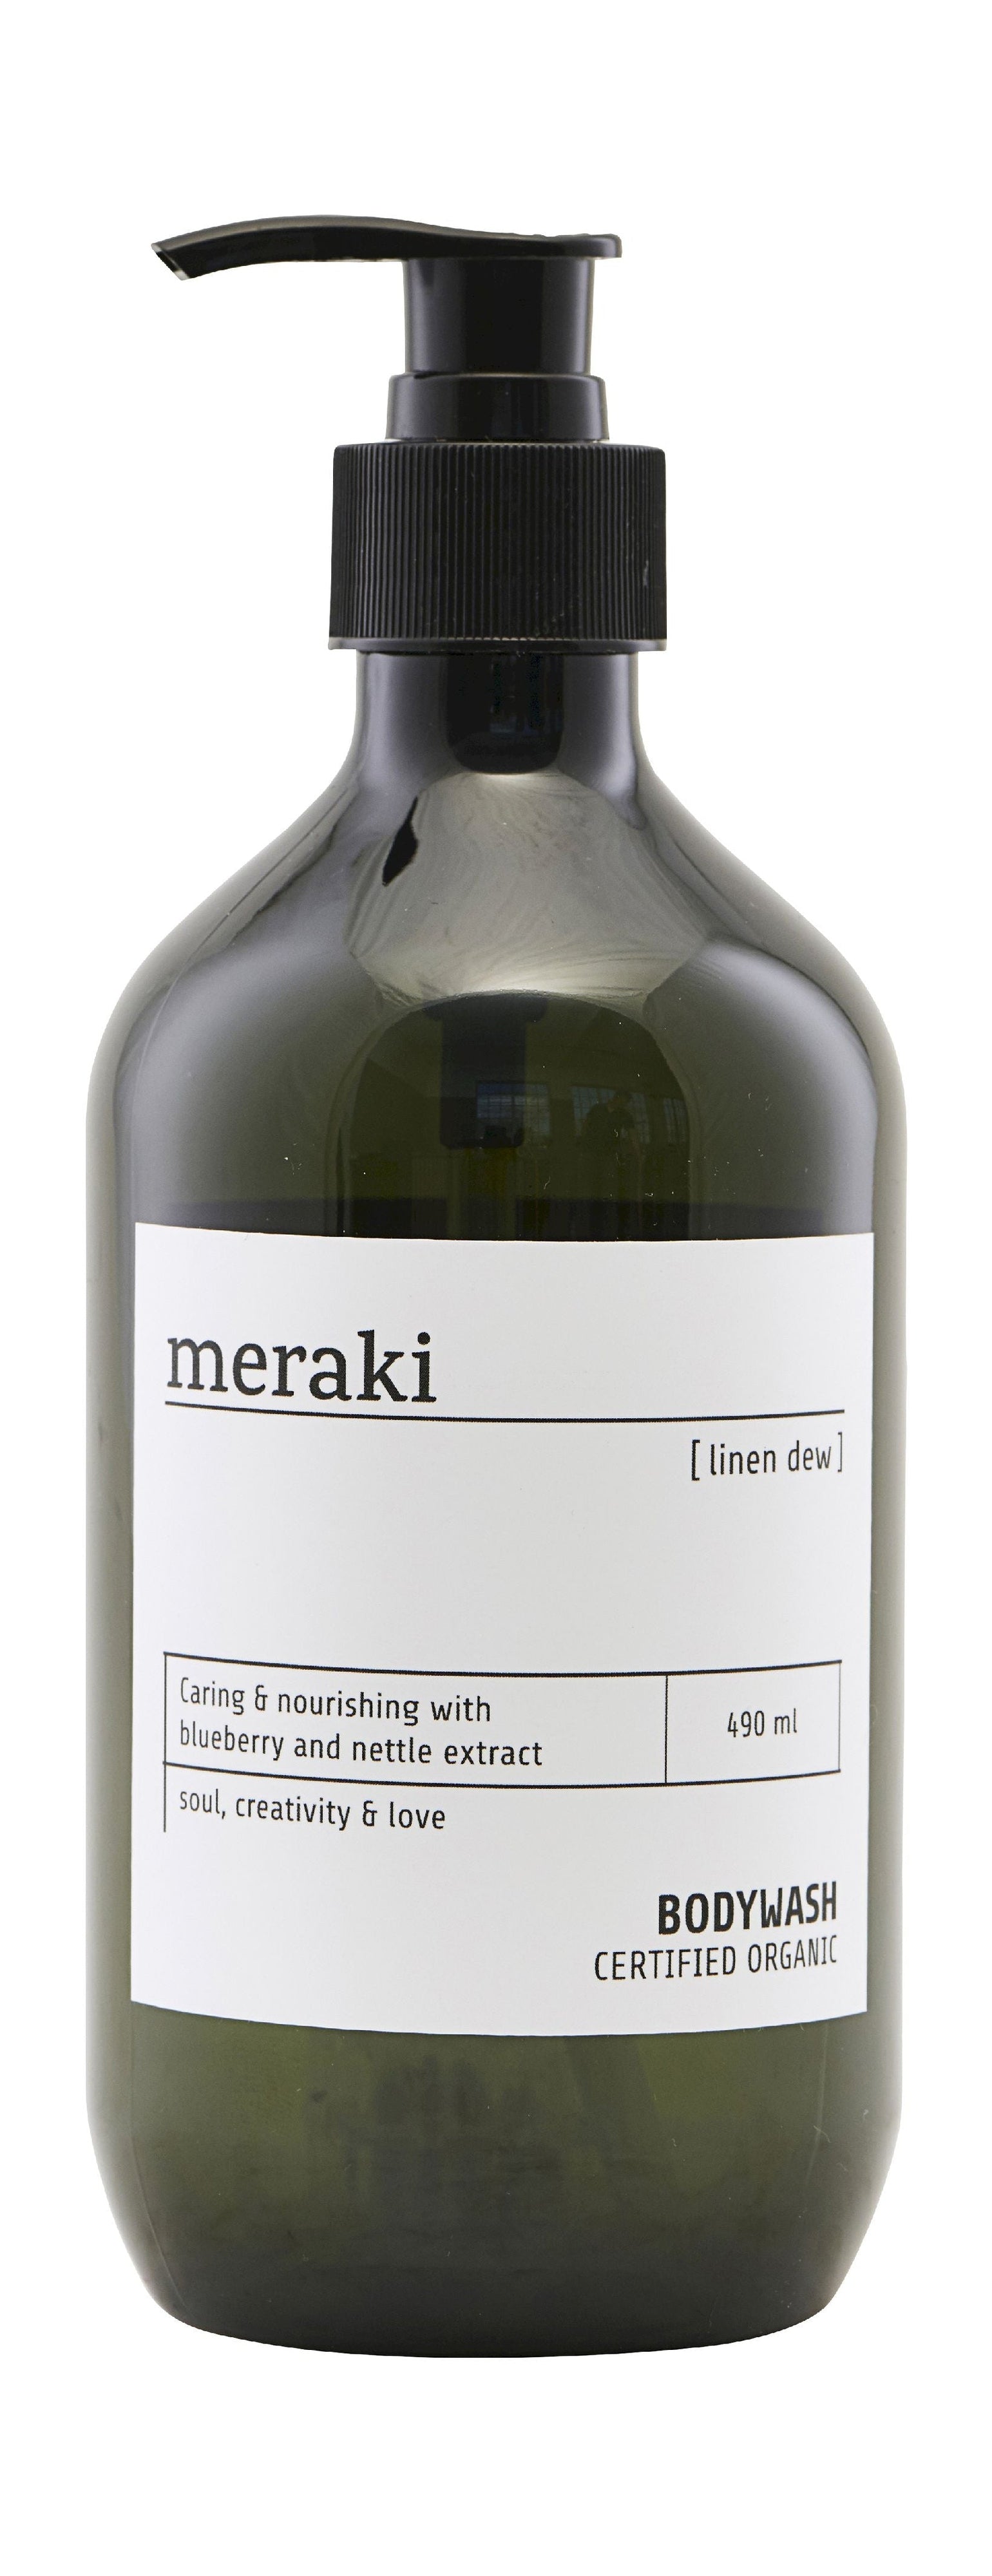 Meraki Gel de douche 490 ml, rosée en lin